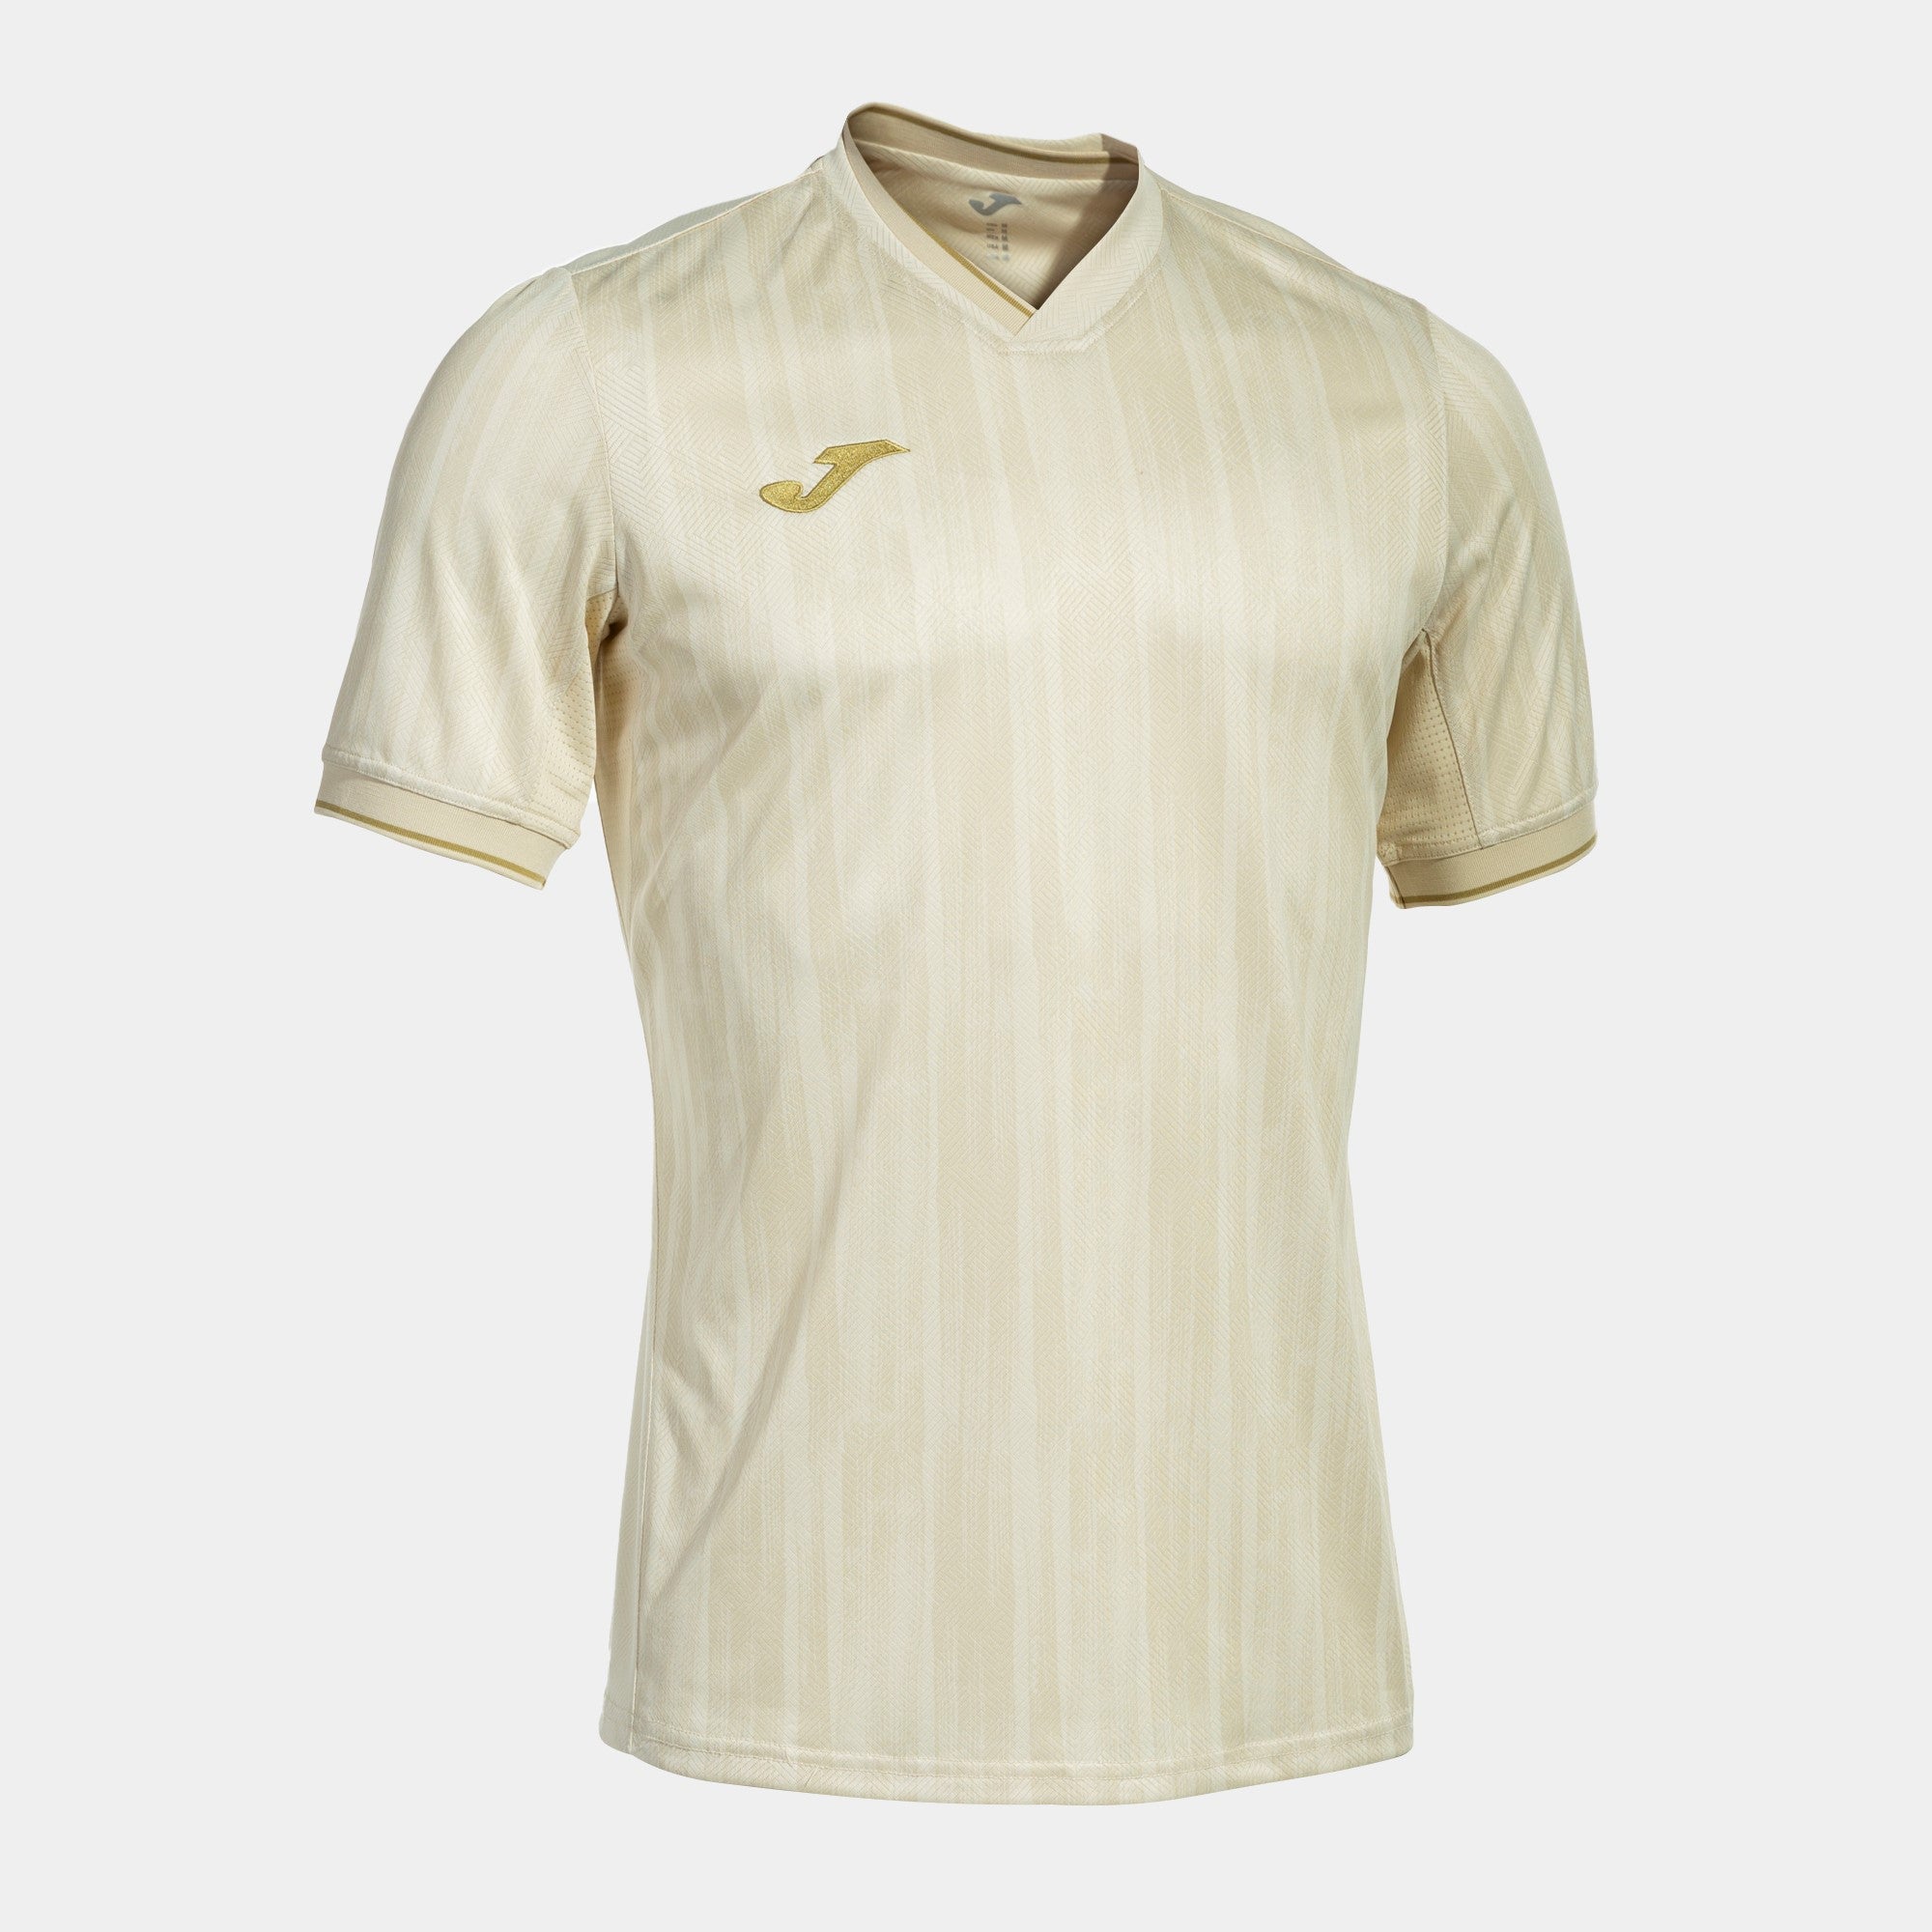 Joma Gold VI Short Sleeved T-Shirt - Dark White/Gold